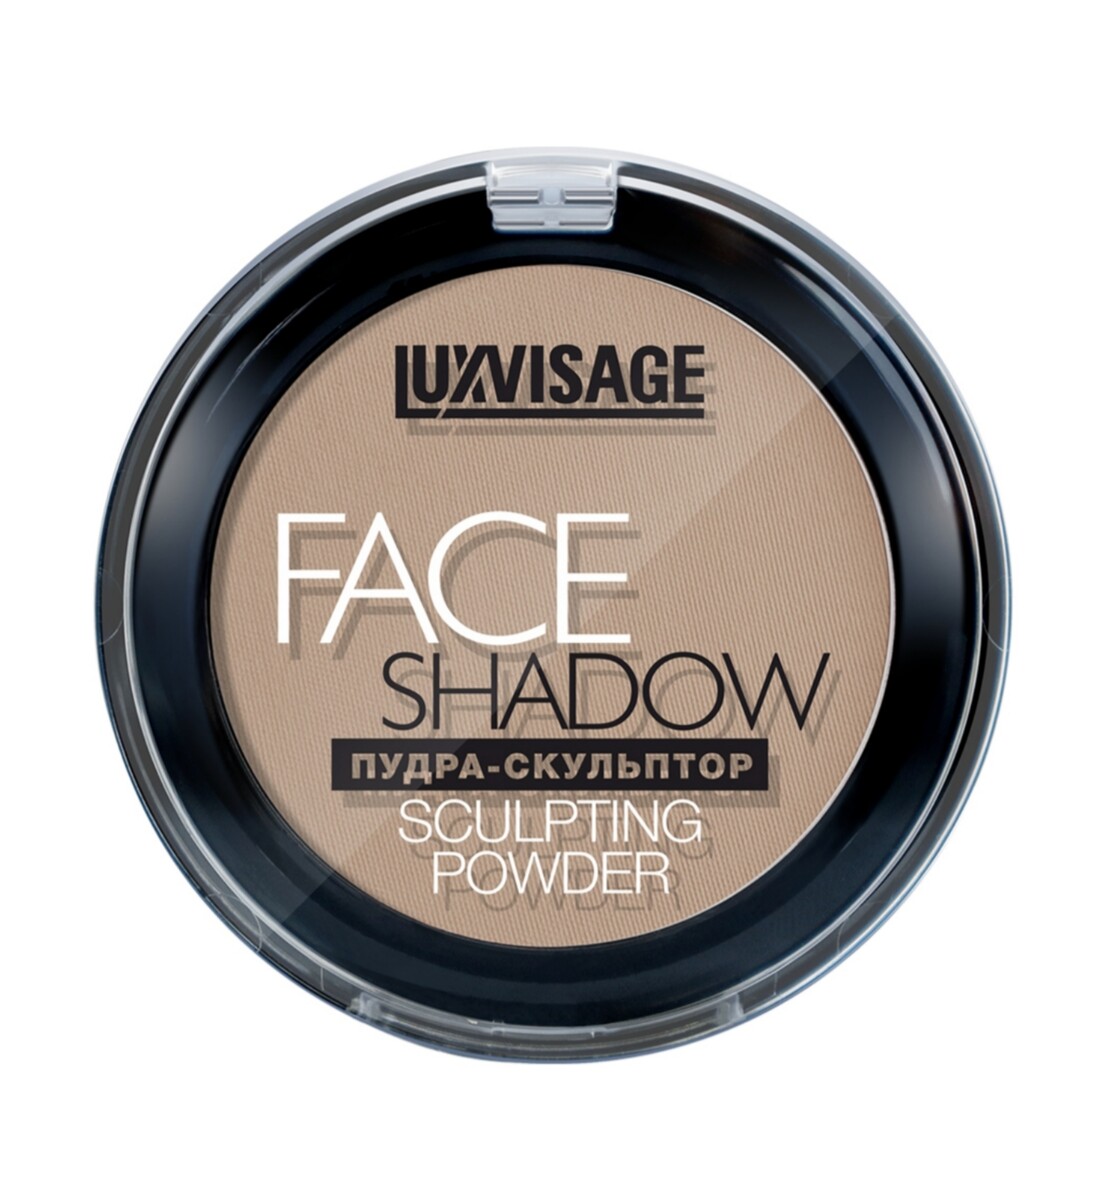 Luxvisage пудра-скульптор luxvisage face shadow, тон 10 warm beige владимир беклемишев скульптор и педагог